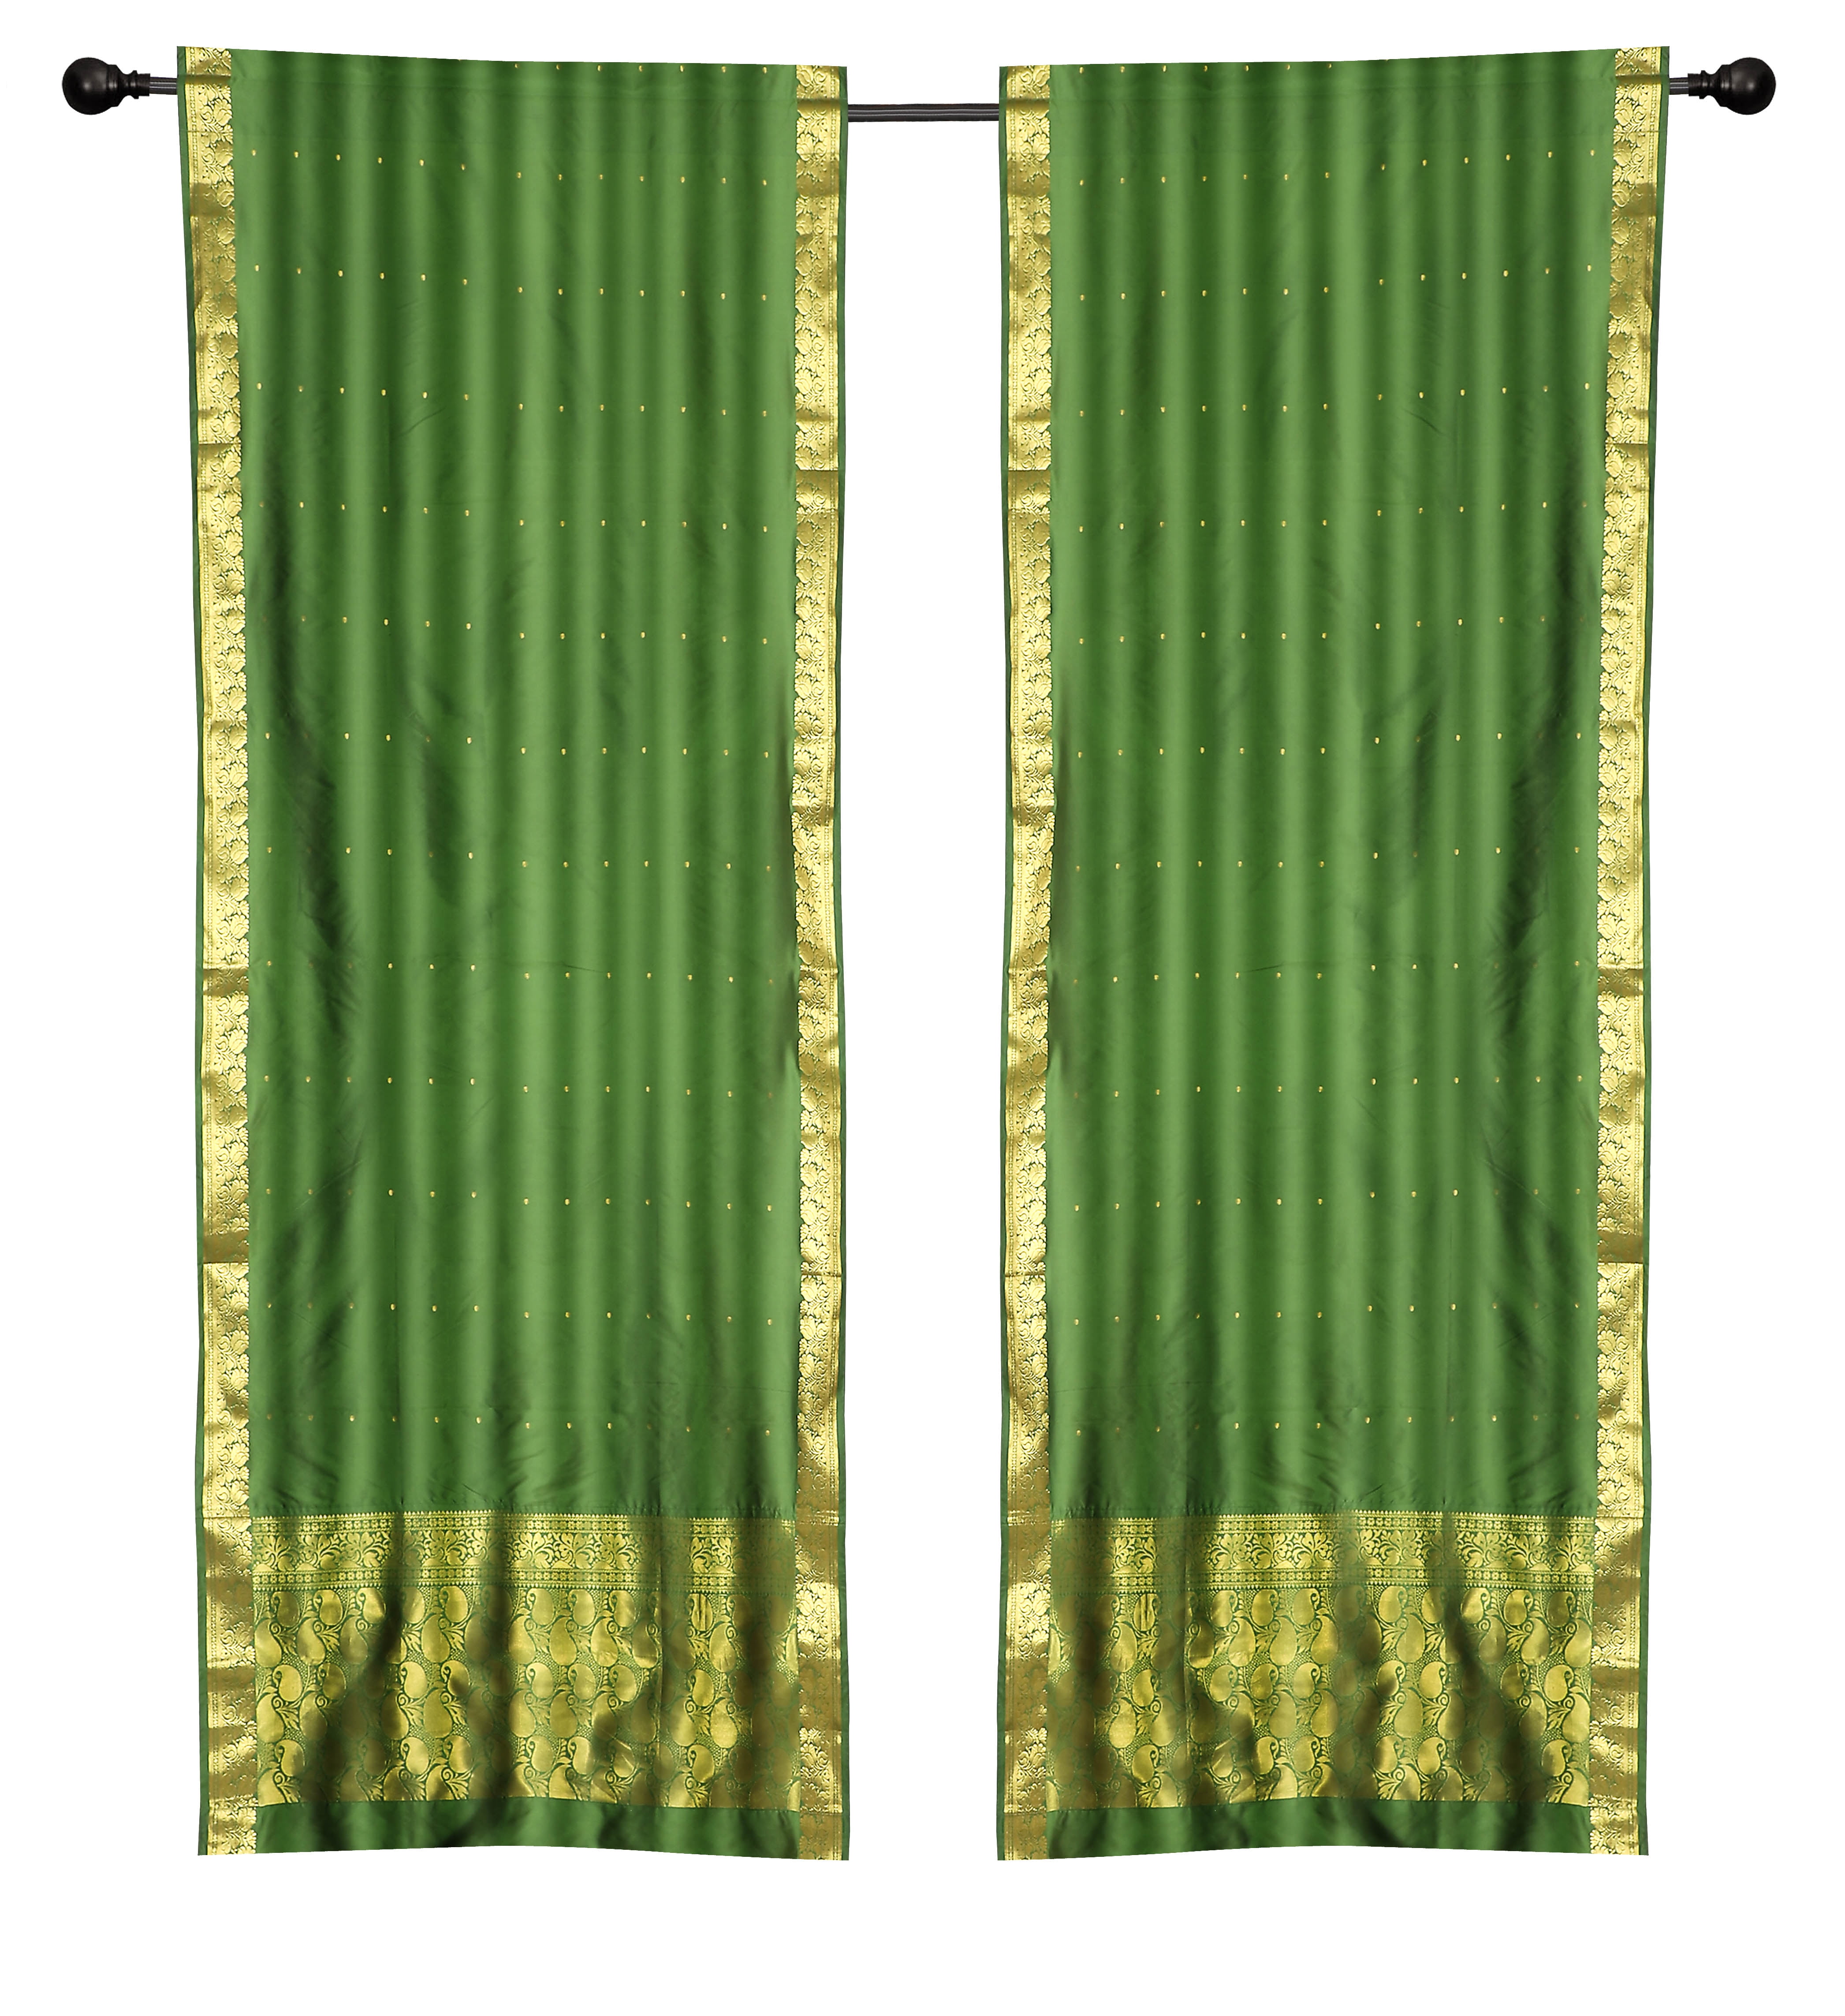 2 Lined Boho Green Indian Sari Curtains Rod Pocket Window Drapes -43W x ...